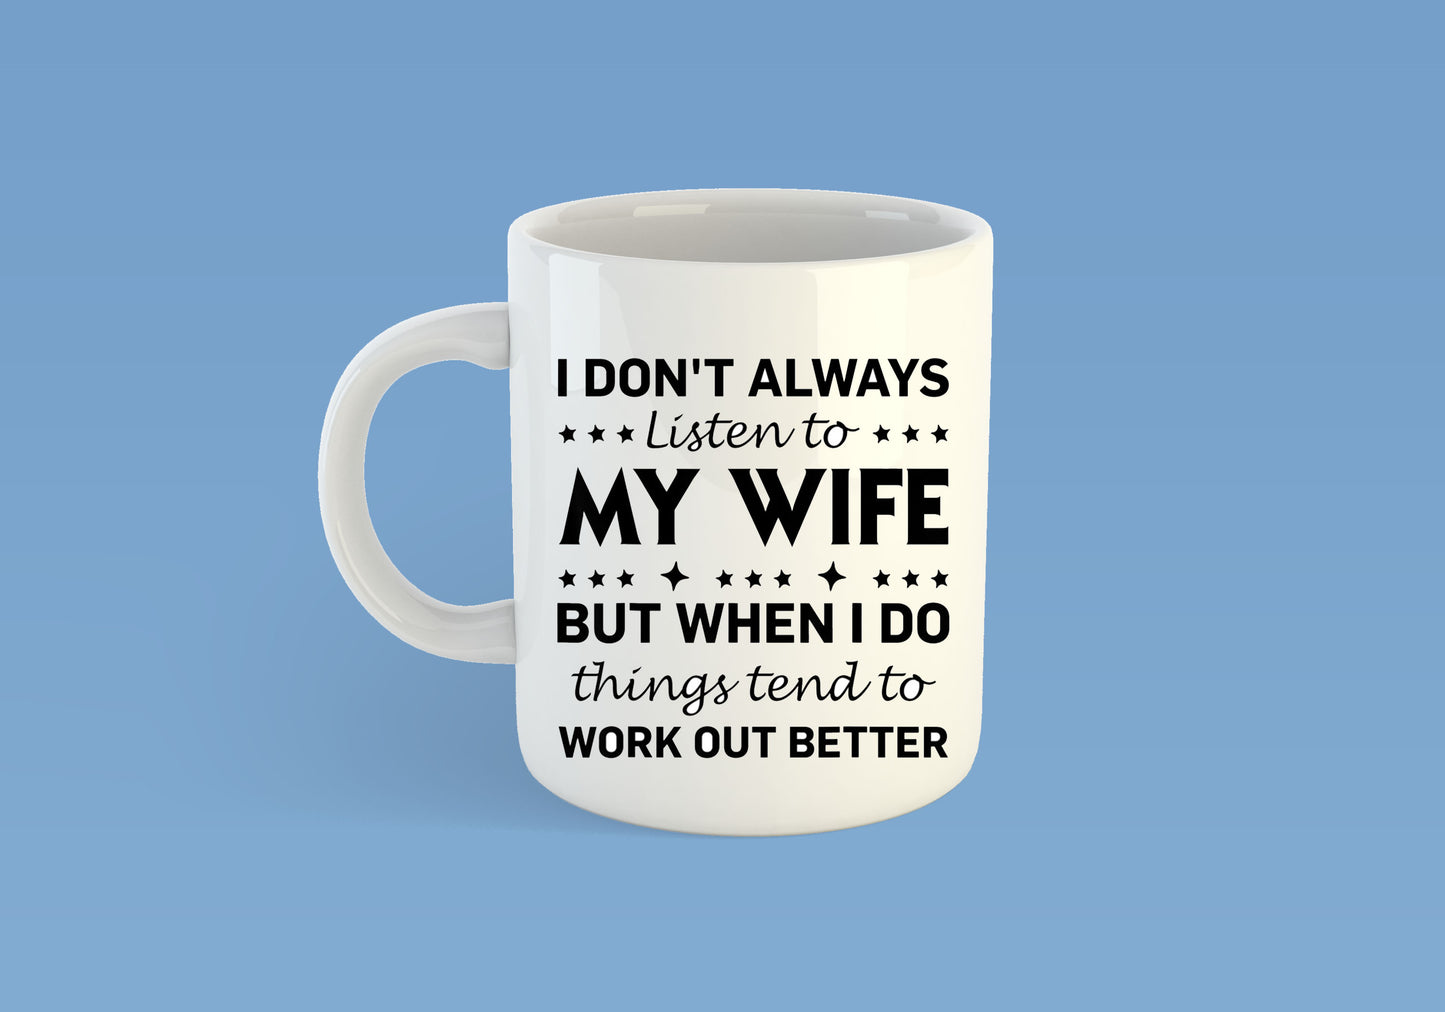 Listen to my wife Mug